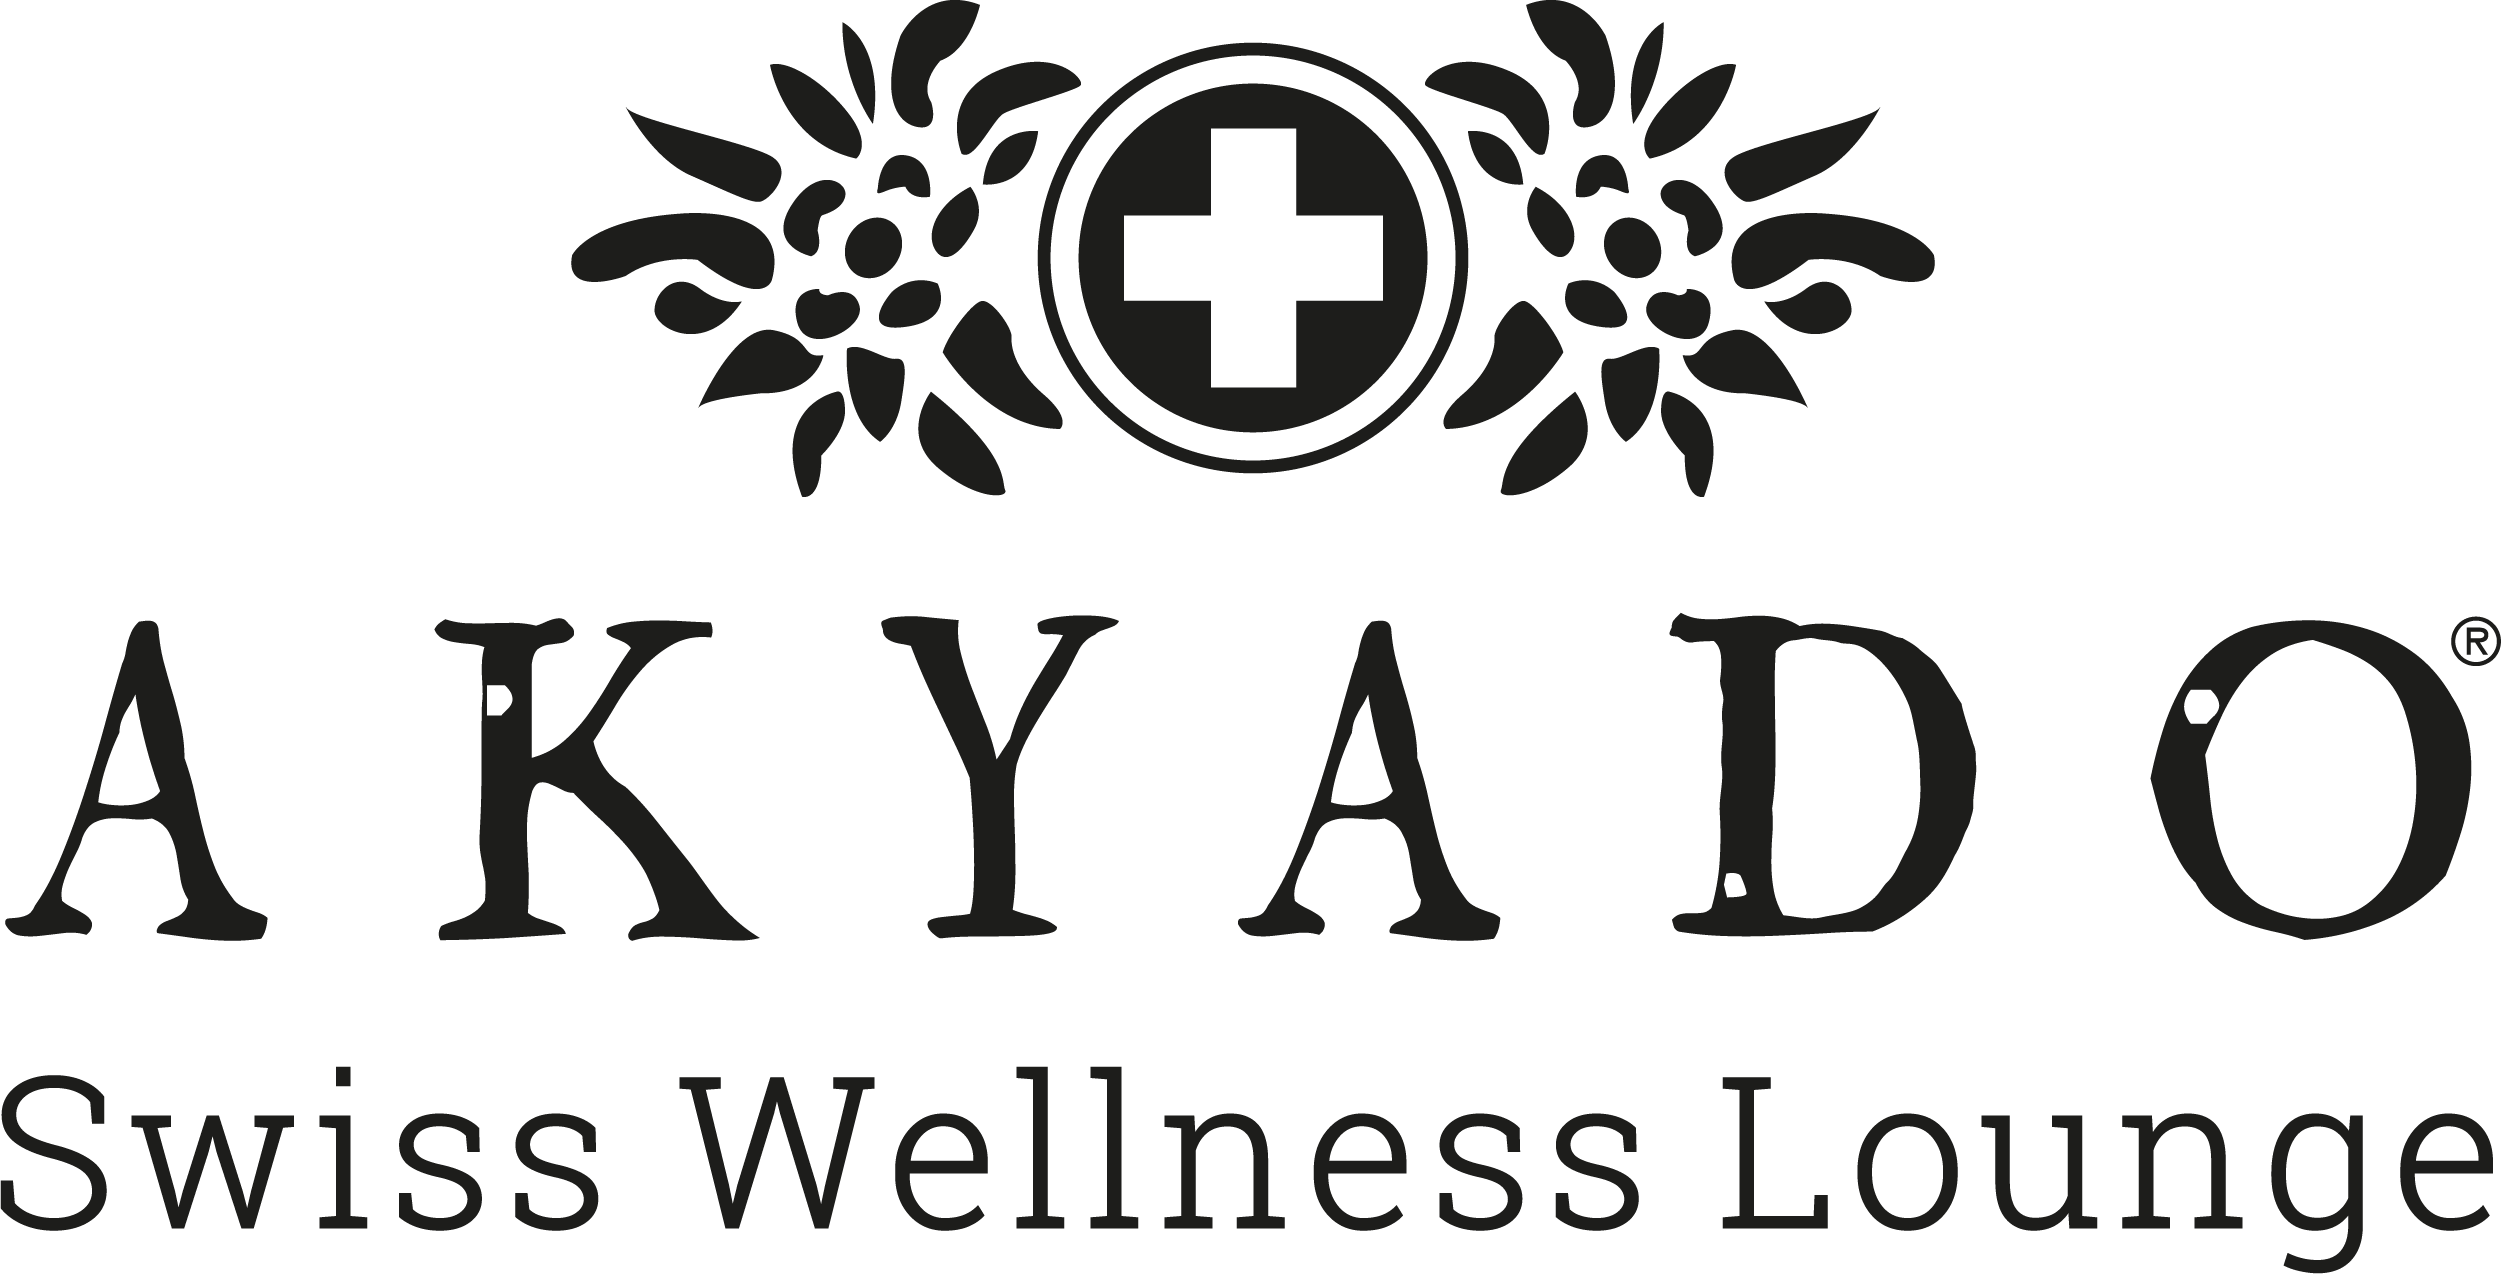 Akyado Swiss Wellness Lounge